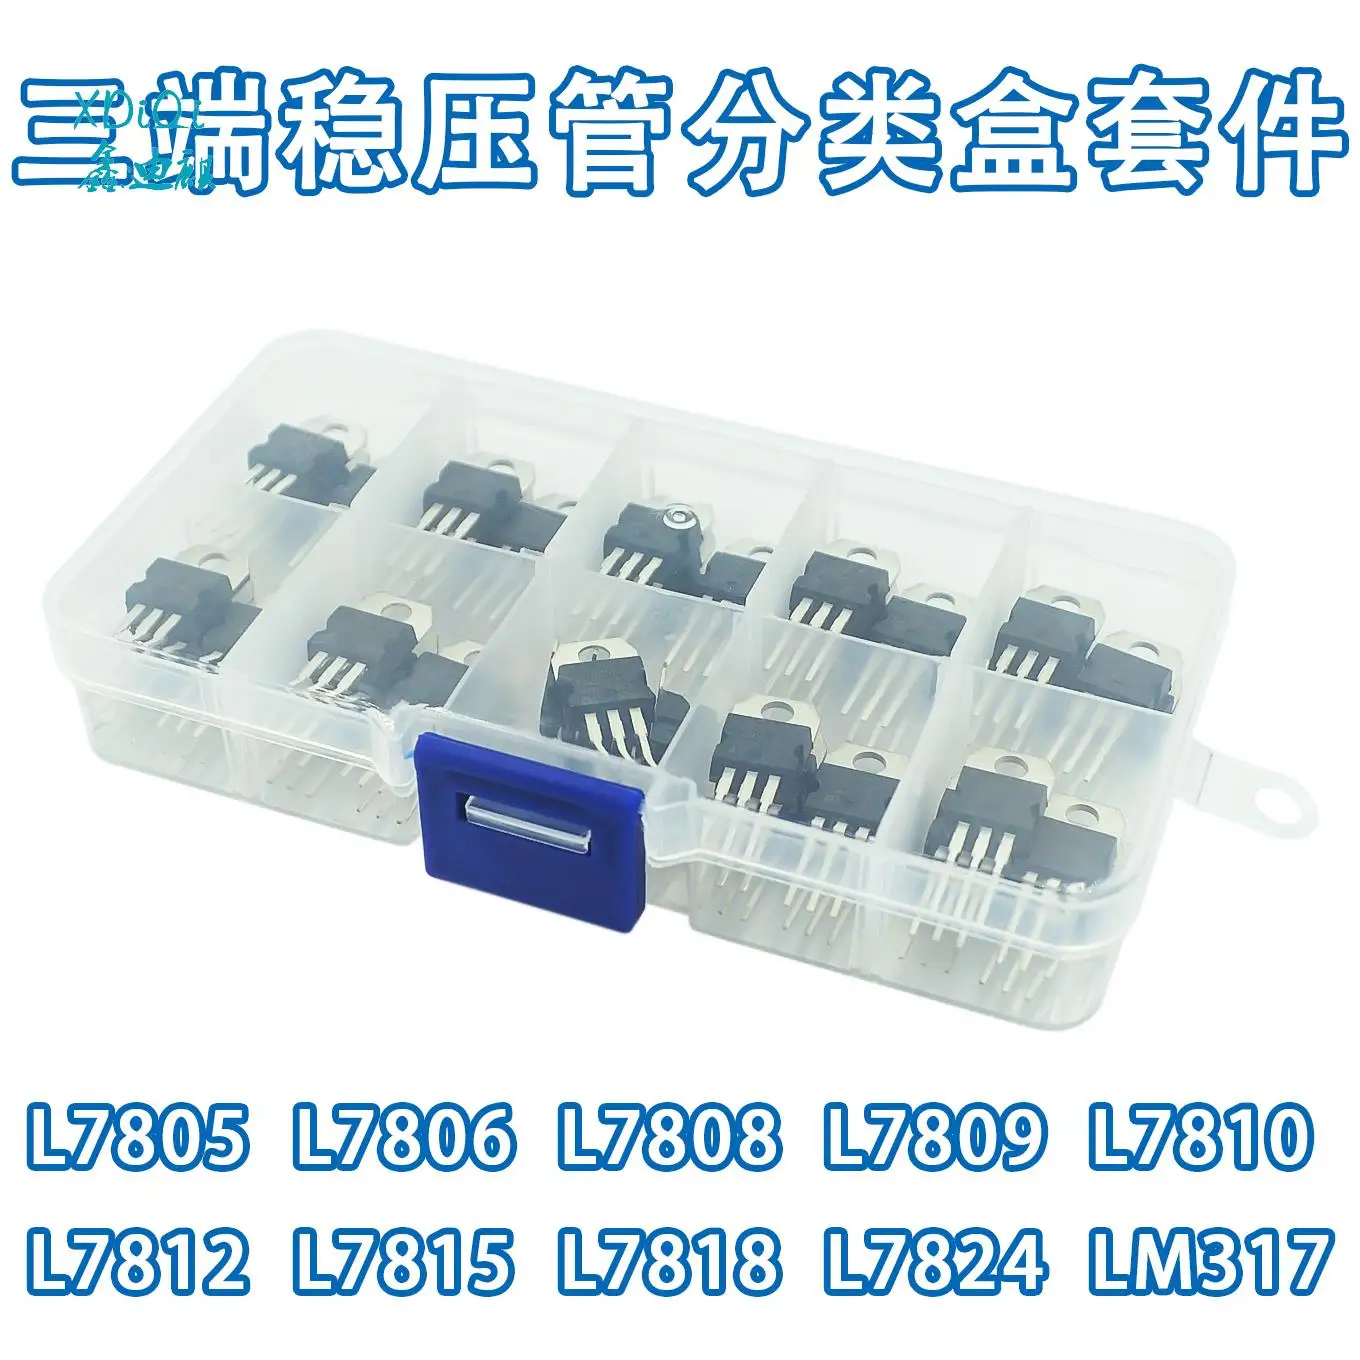 

LM317T L7805 L7806 L7808 L7809 L7810 L7812 L7815 L7818 L7824 транзисторный набор 10 значений 50 шт., коробка регулятора напряжения